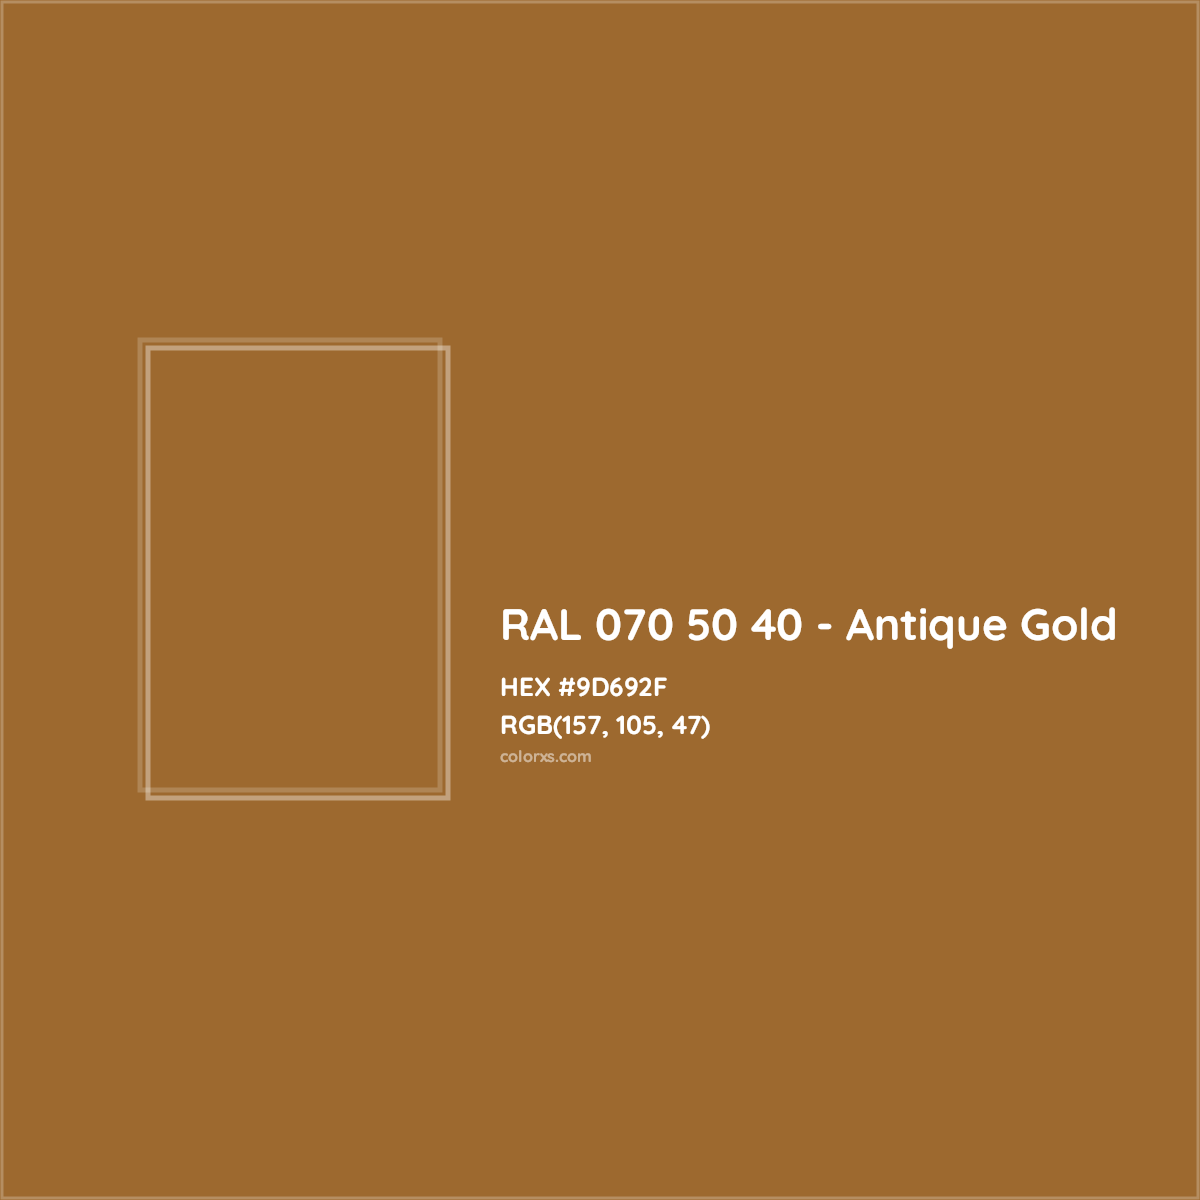 HEX #9D692F RAL 070 50 40 - Antique Gold CMS RAL Design - Color Code